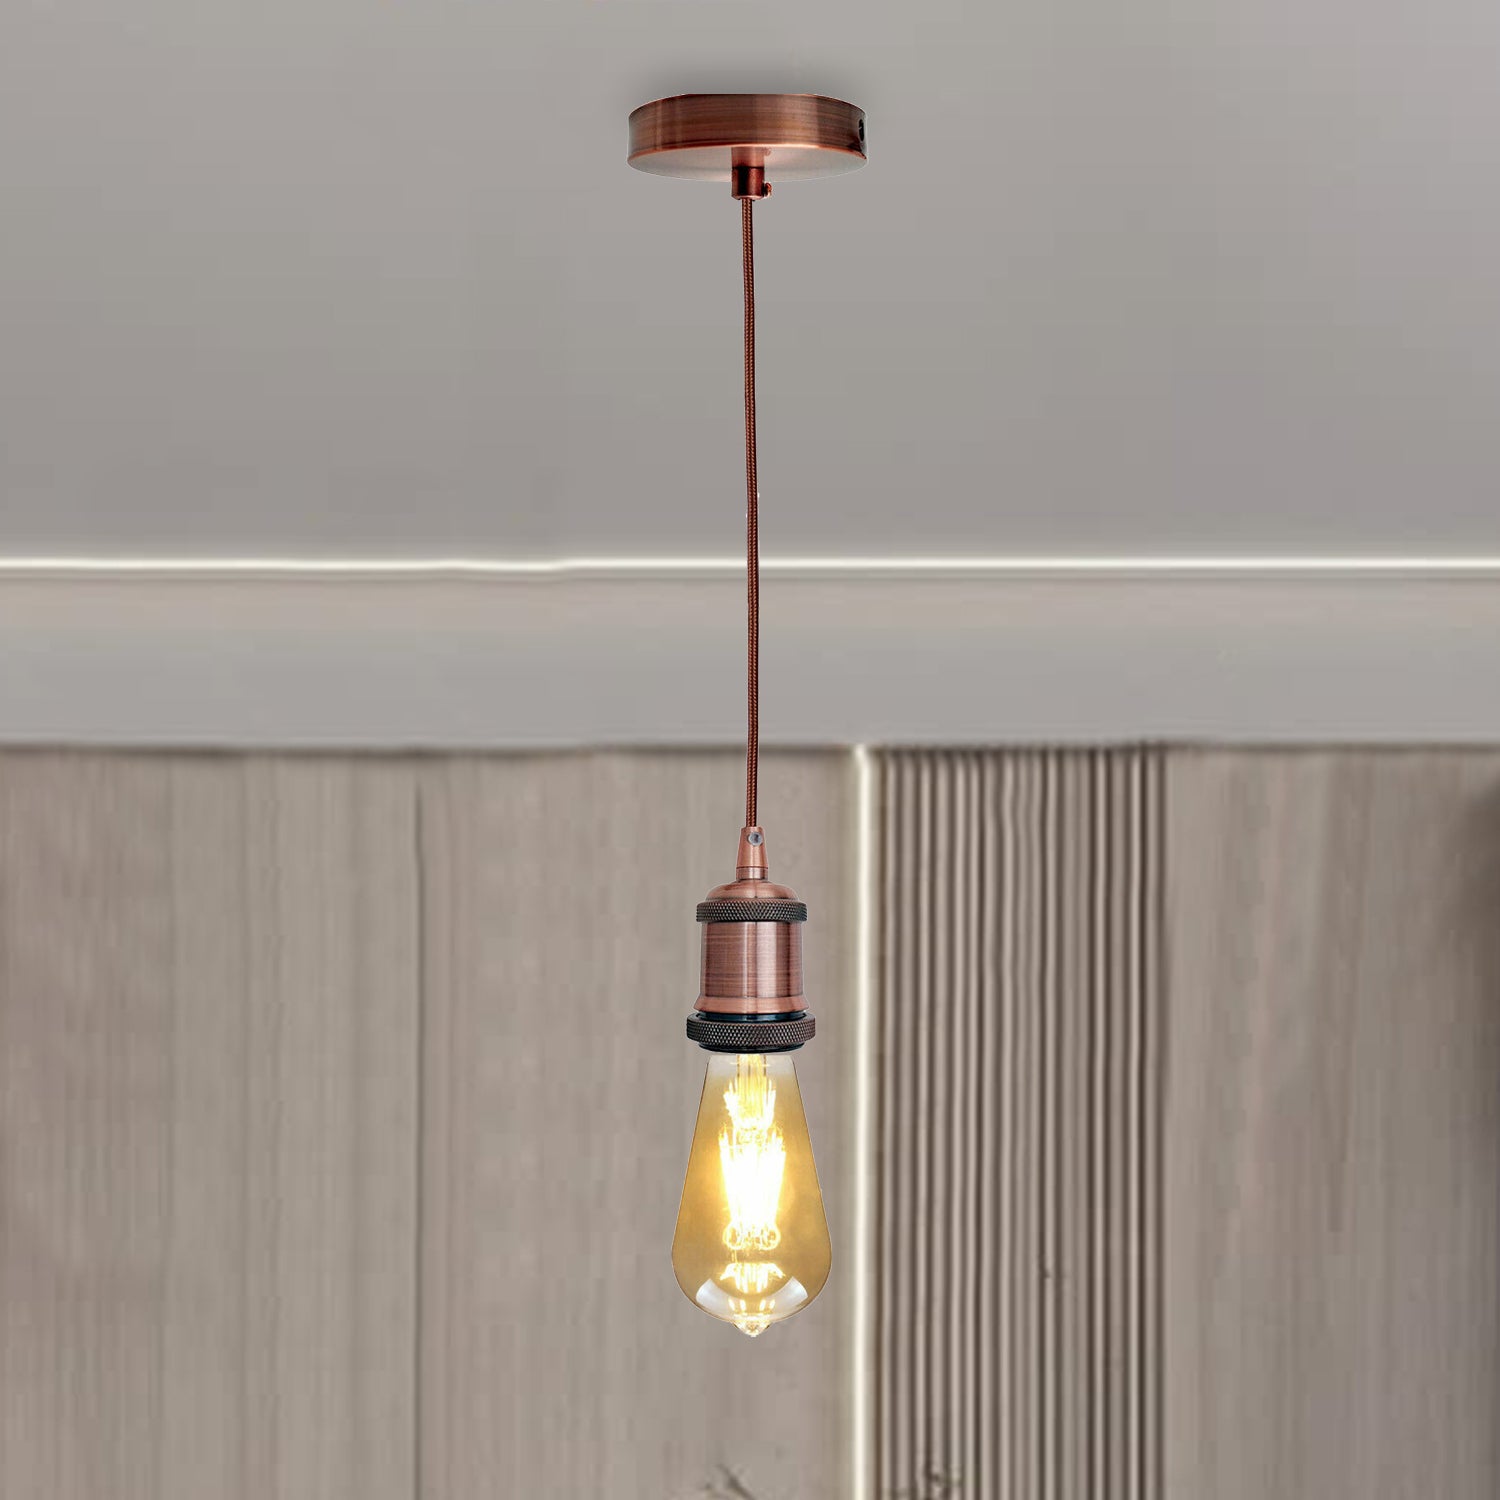 Retro Industrial Vintage Pendant Ceiling Rose Fitting E27 Lamp Bulb Holder - Application Image 4